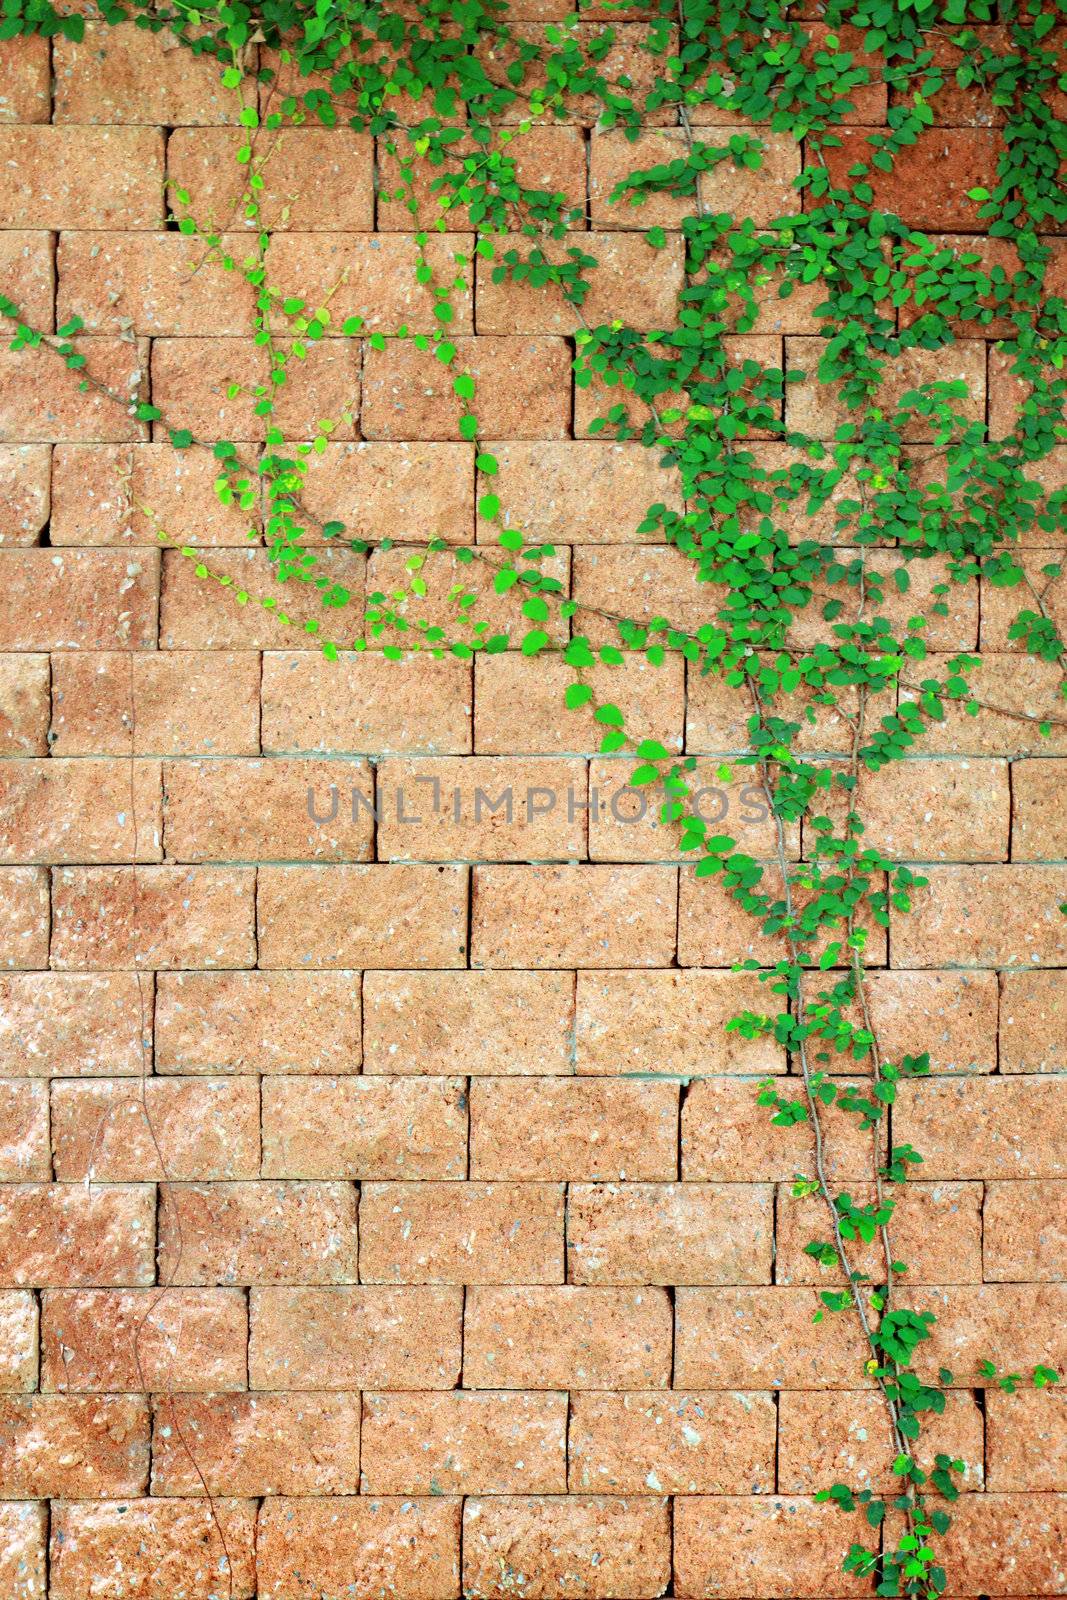 Green ivy on the orange brick wall  by nuchylee